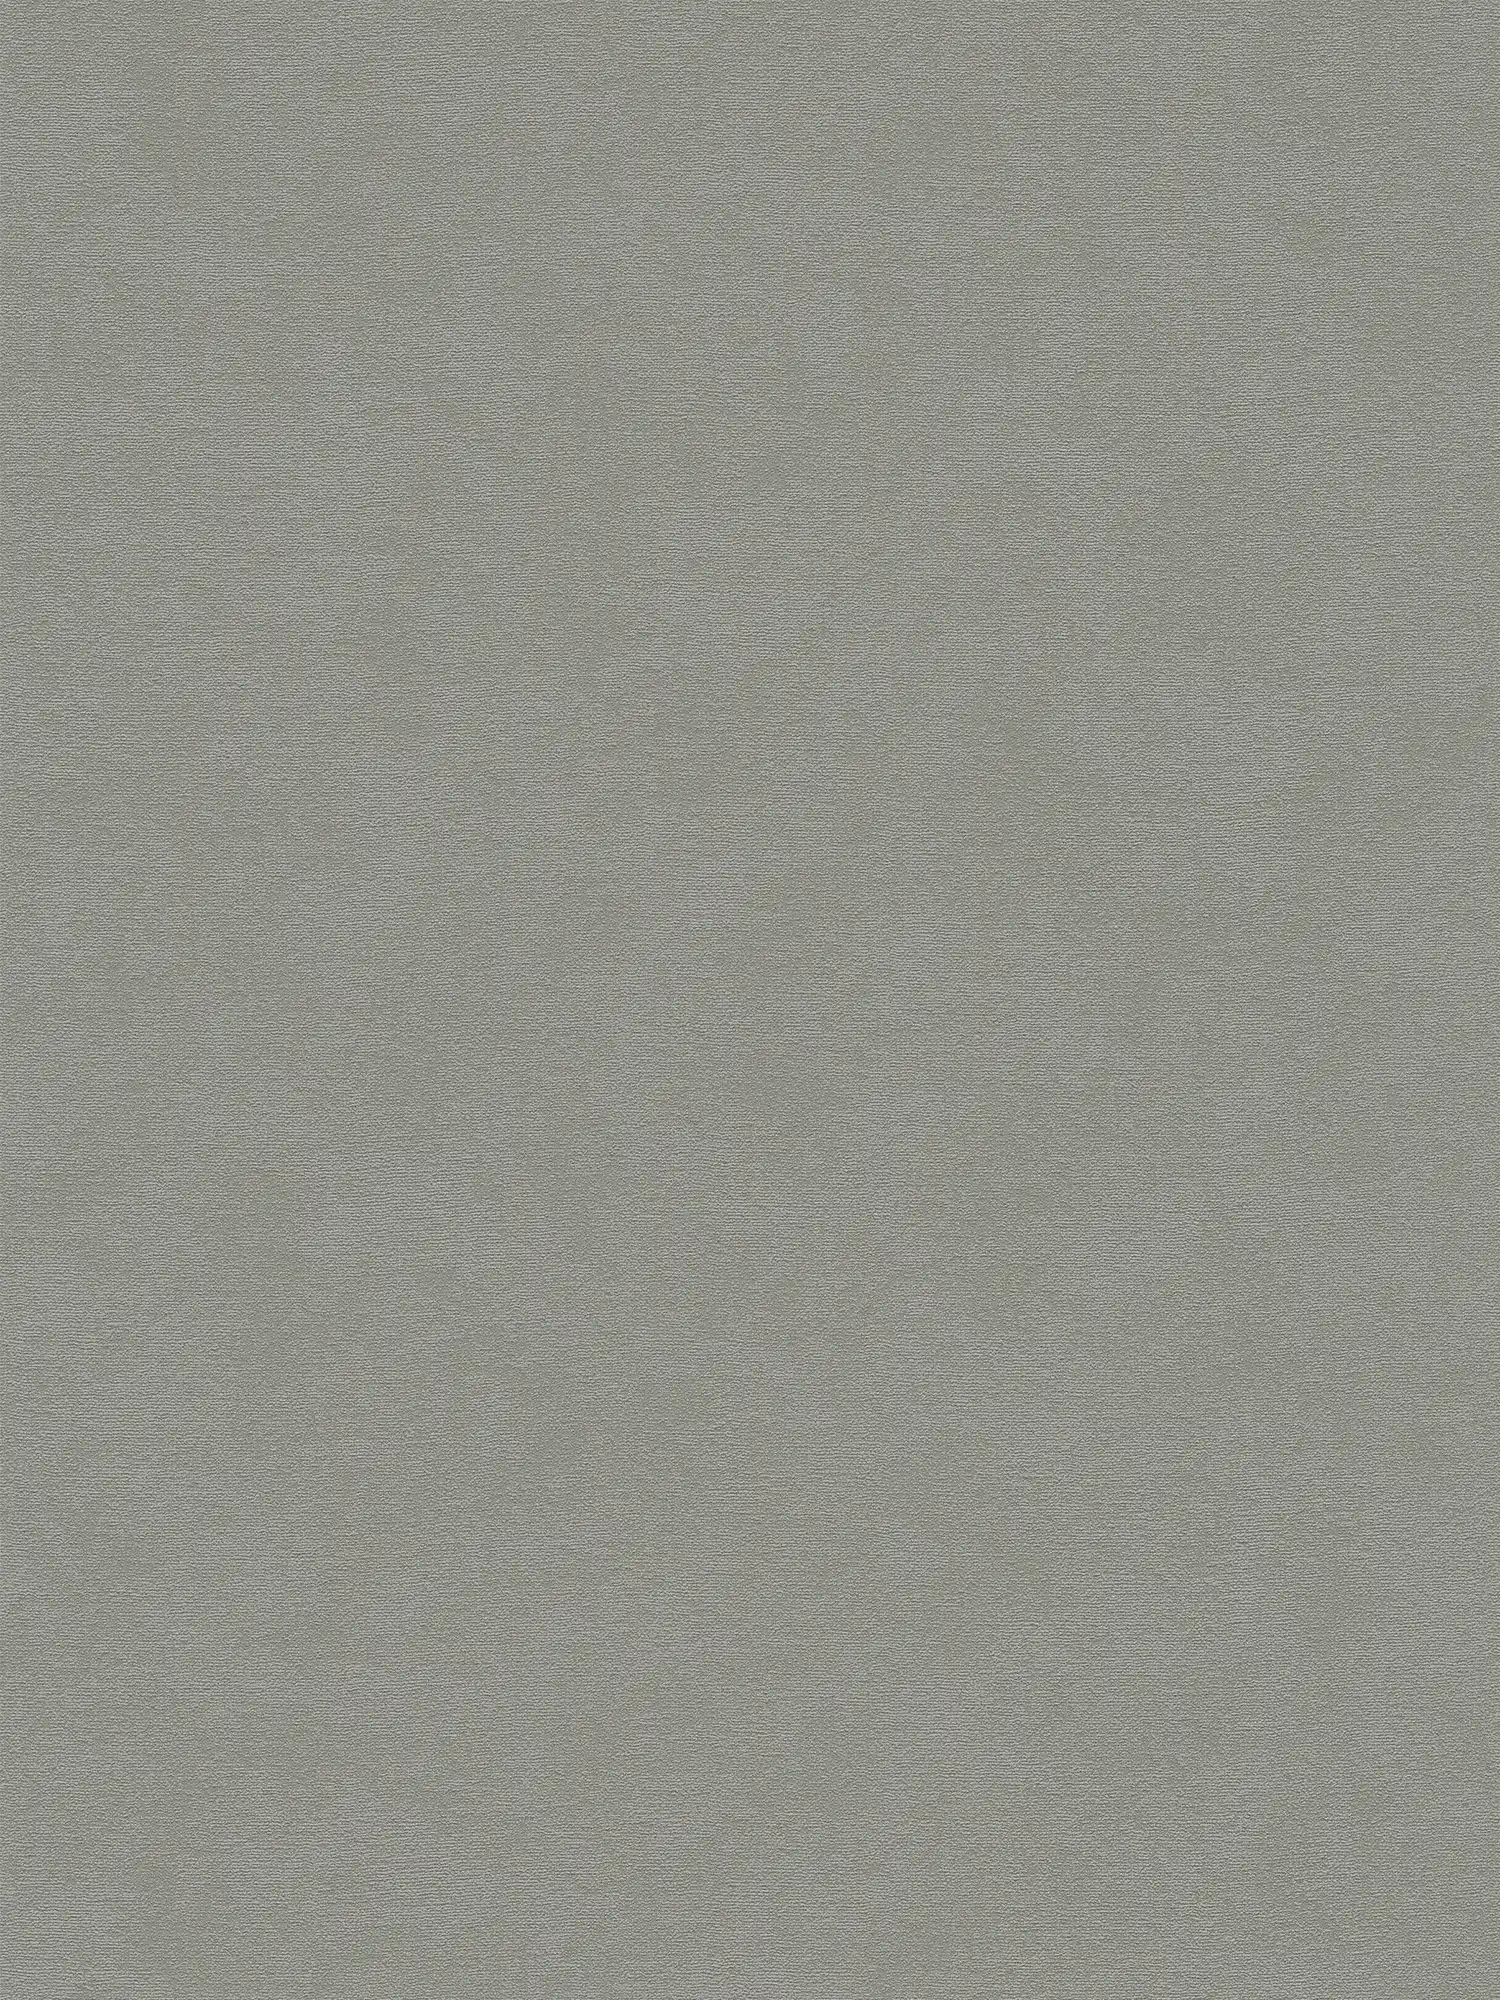 Papel pintado tejido-no tejido superficie monocolor textura fina - gris
